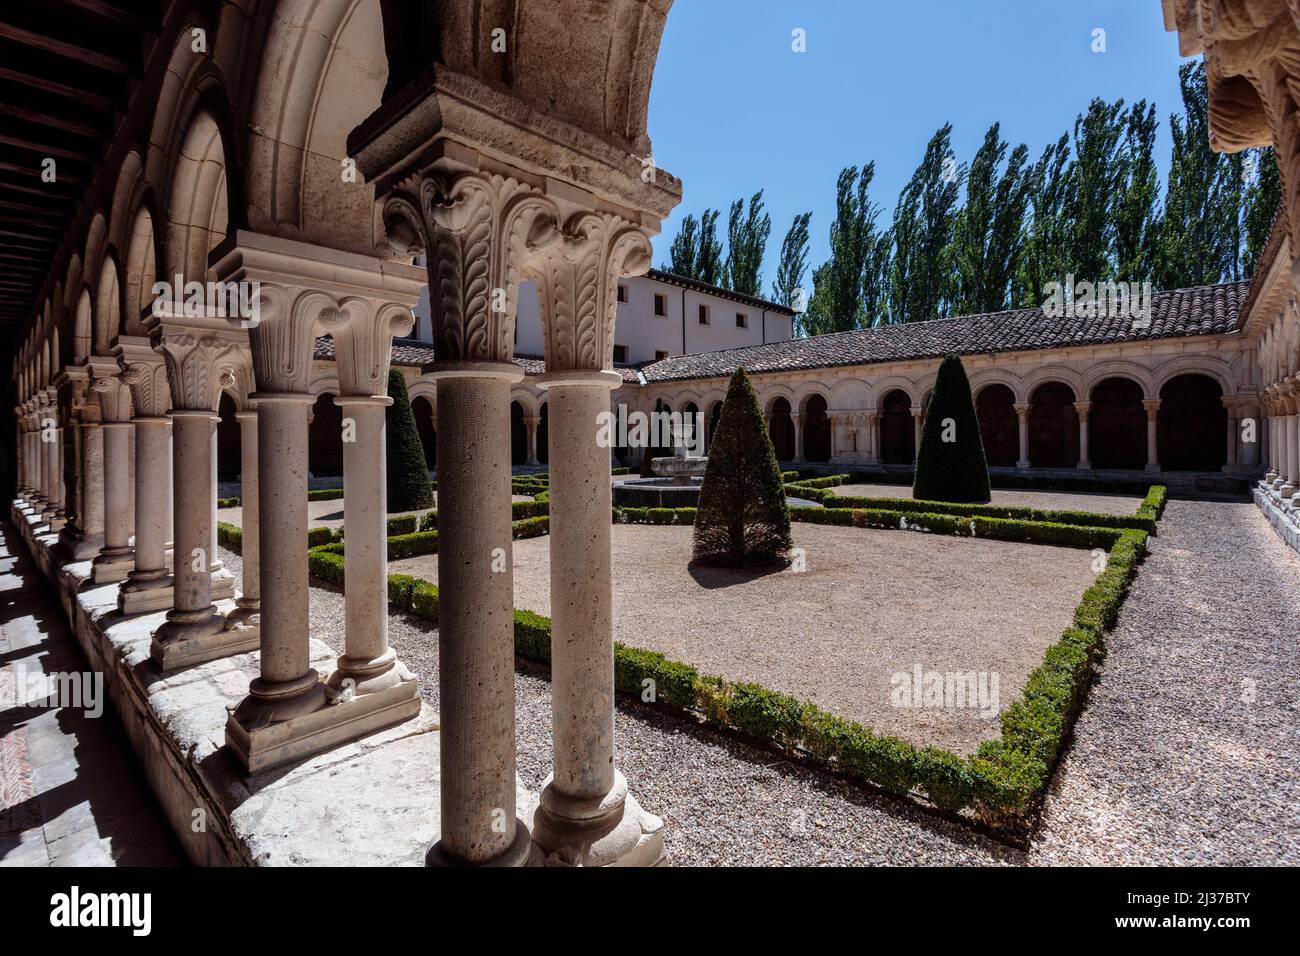 Cloister of the Monastery of Santa Maria la Real de las Huelgas, a Romanesque monastery in Burgos. Spain. Stock Photo